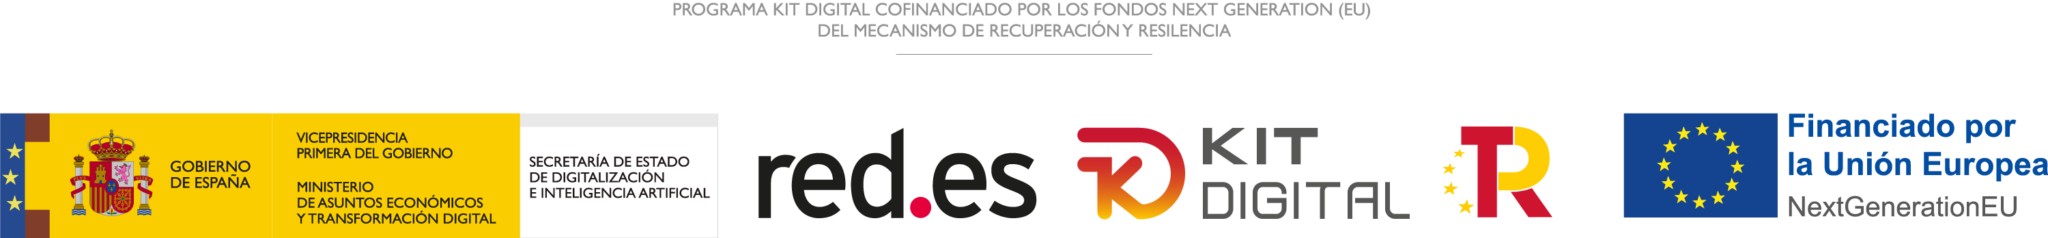 Banner del programa de subvenciones de kit digital